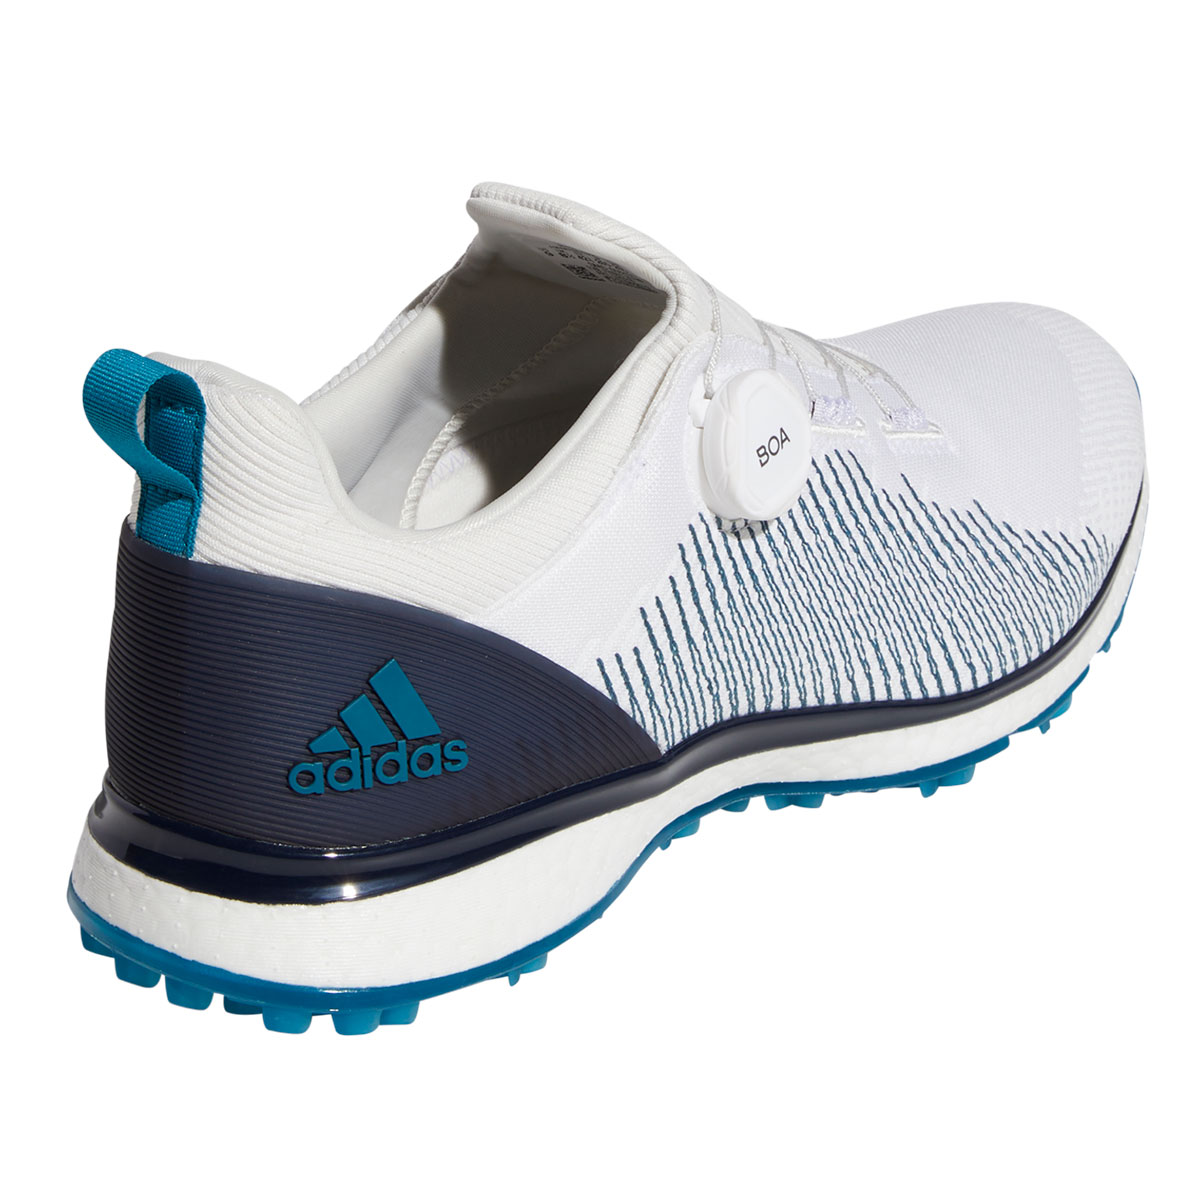 adidas men's forgefiber boa golf shoes